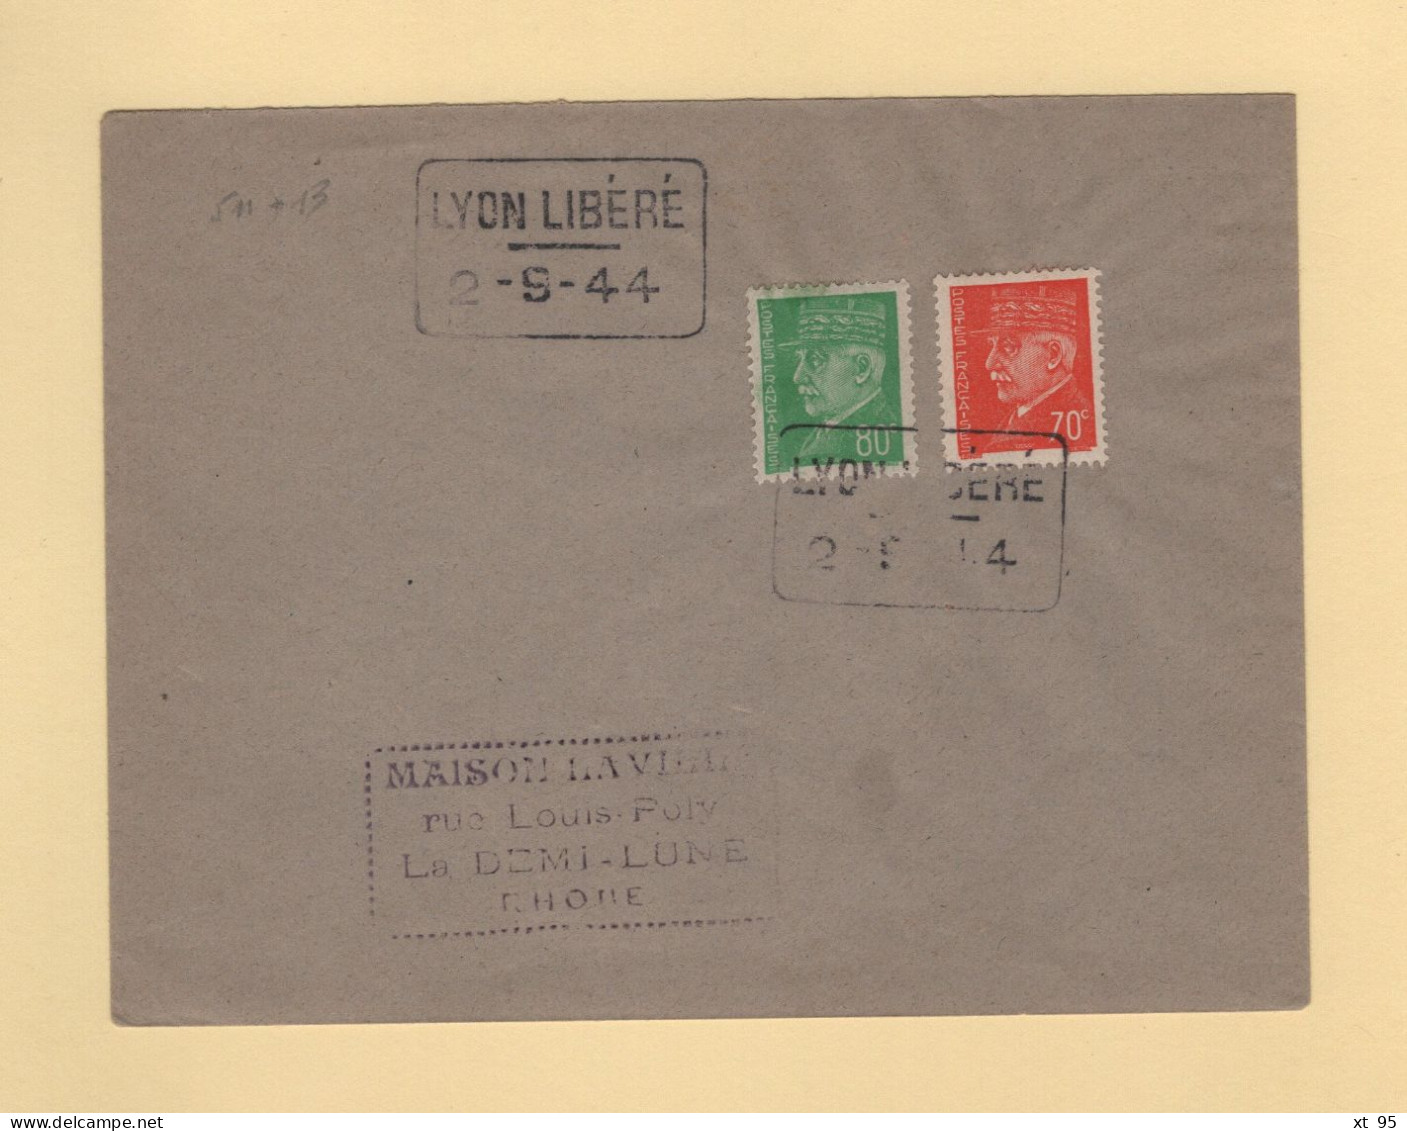 Liberation - Lyon Libere - 2-9-44 - Type Petain - Befreiung